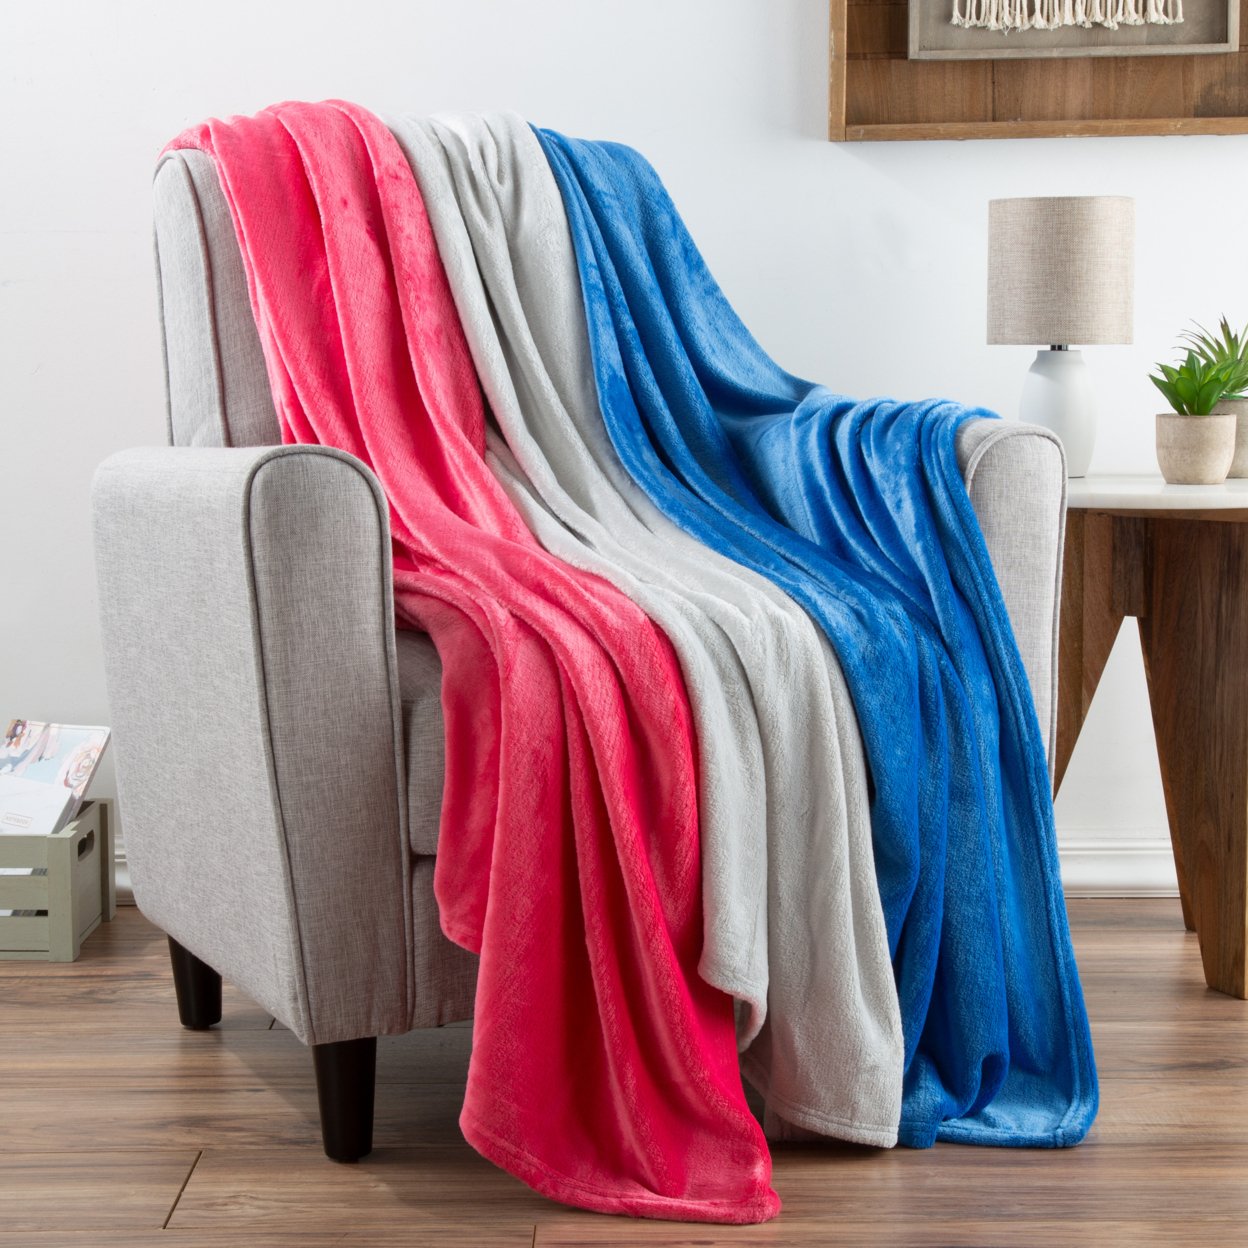 Fleece Throw Blanket- Set Of 3- Blue, Gray & Pink Plush 60 X 50 Throw Blankets- Soft & Cozy